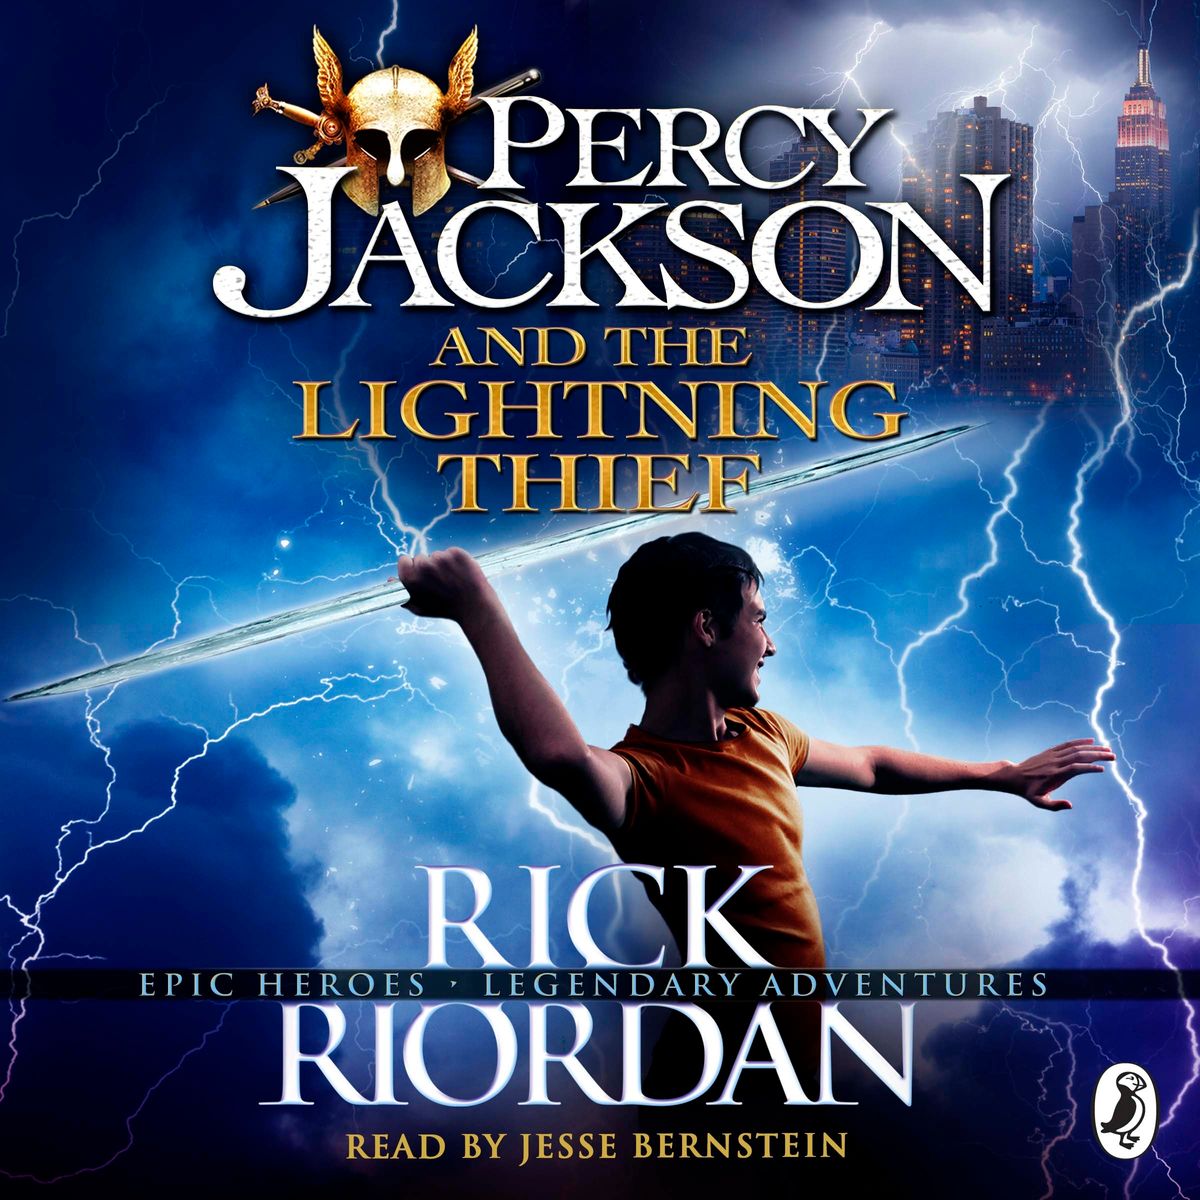 percy jackson book lightning thief pdf